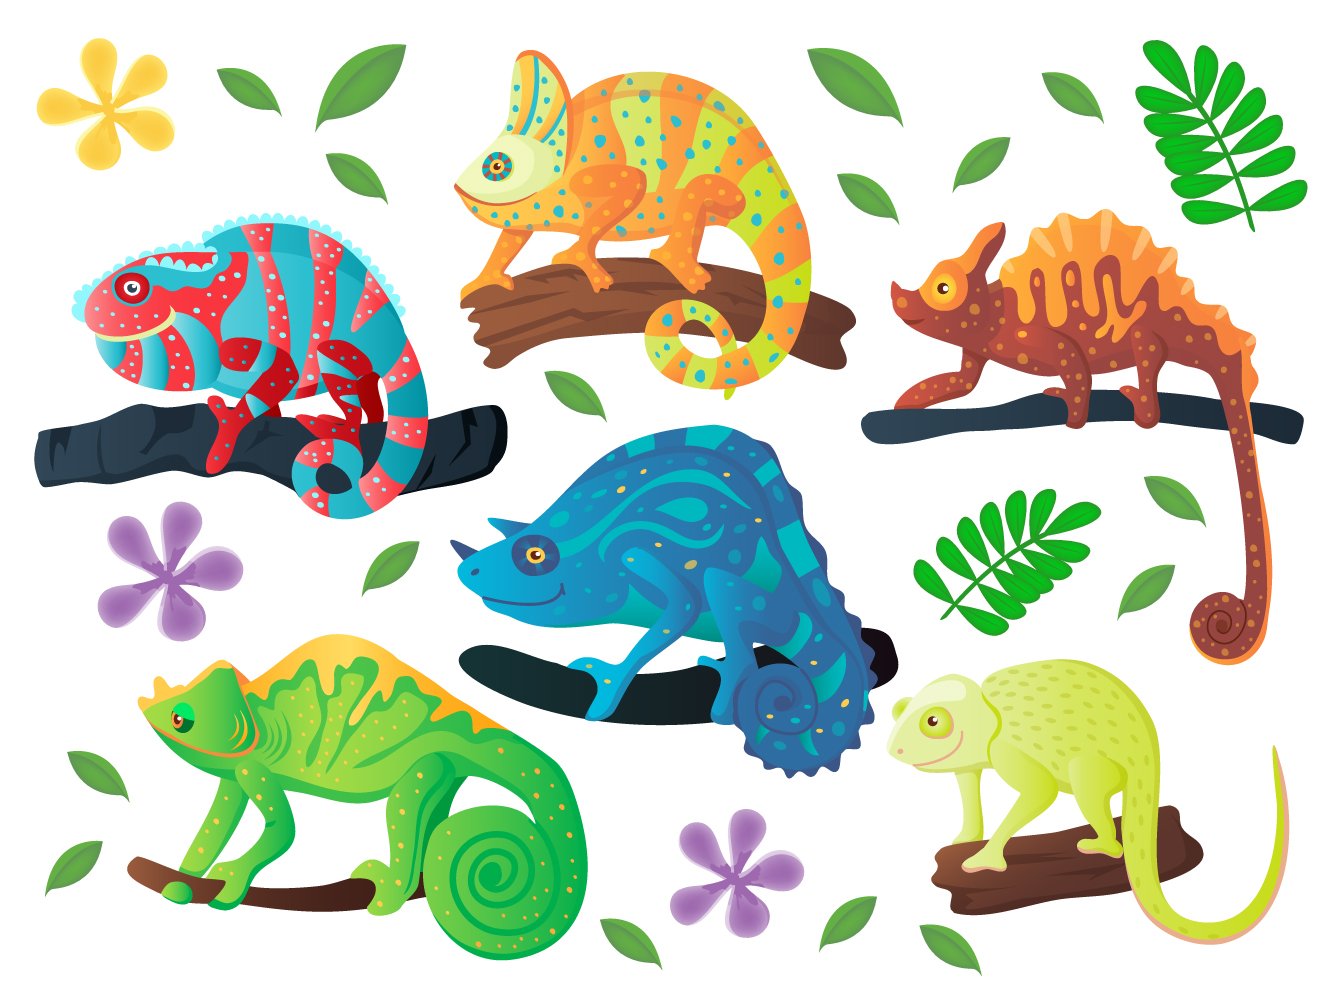 Chameleon iguana cartoon vector set preview image.